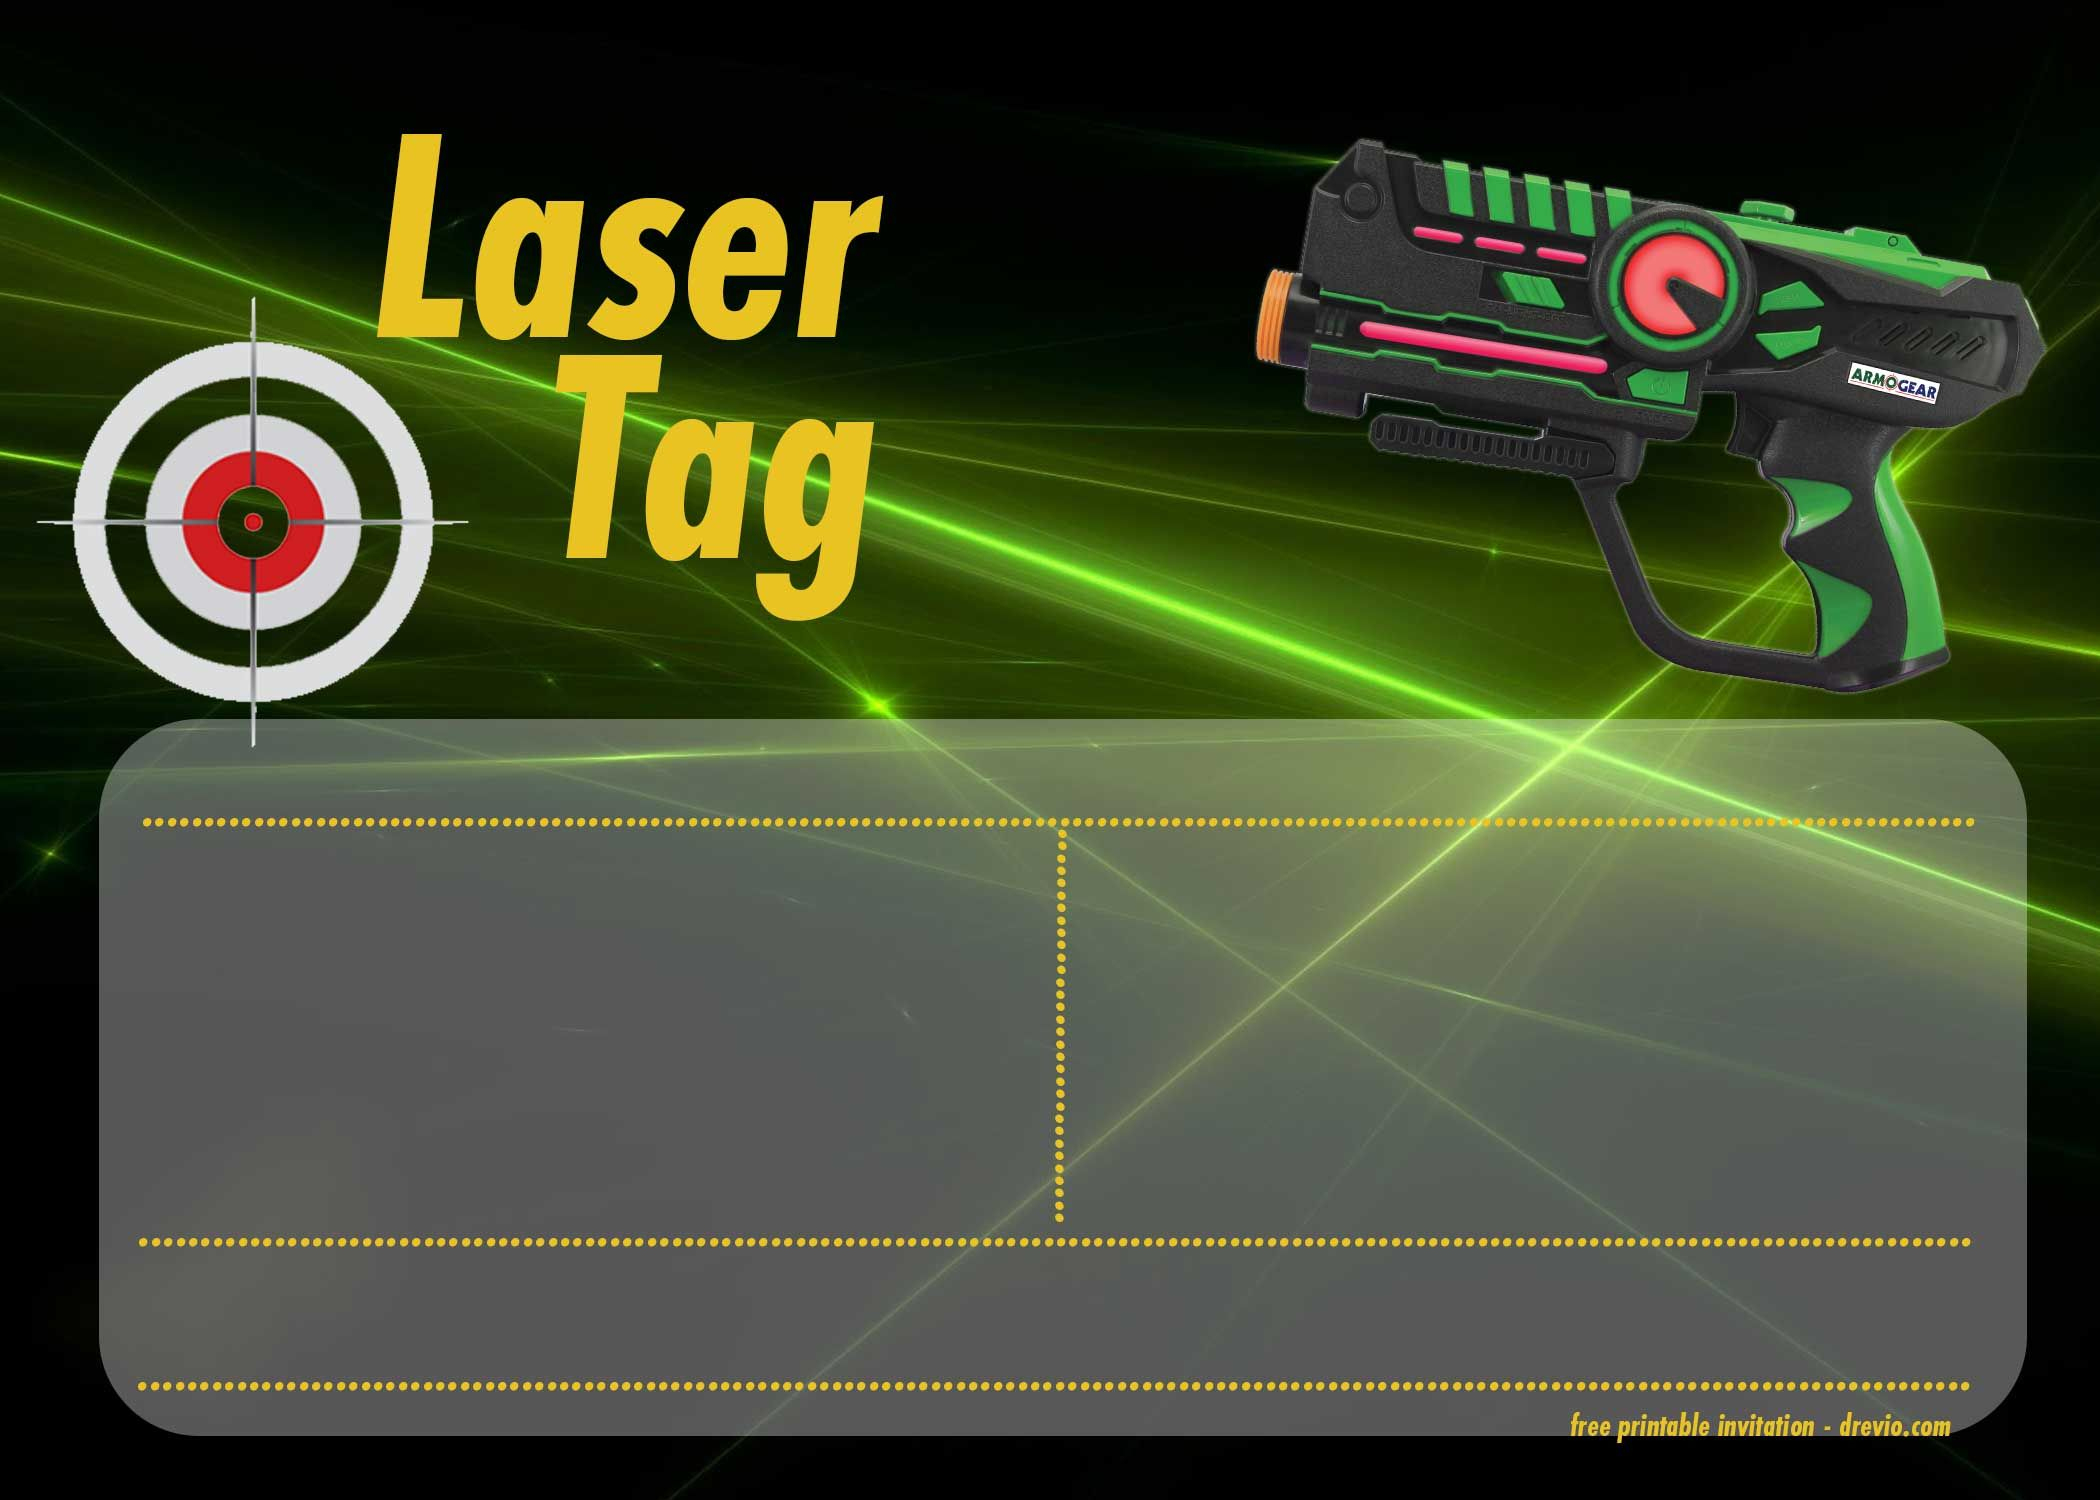 Free Printable Laser Tag Invitation Templates | Boys Party Ideas - Free Printable Laser Tag Invitation Template